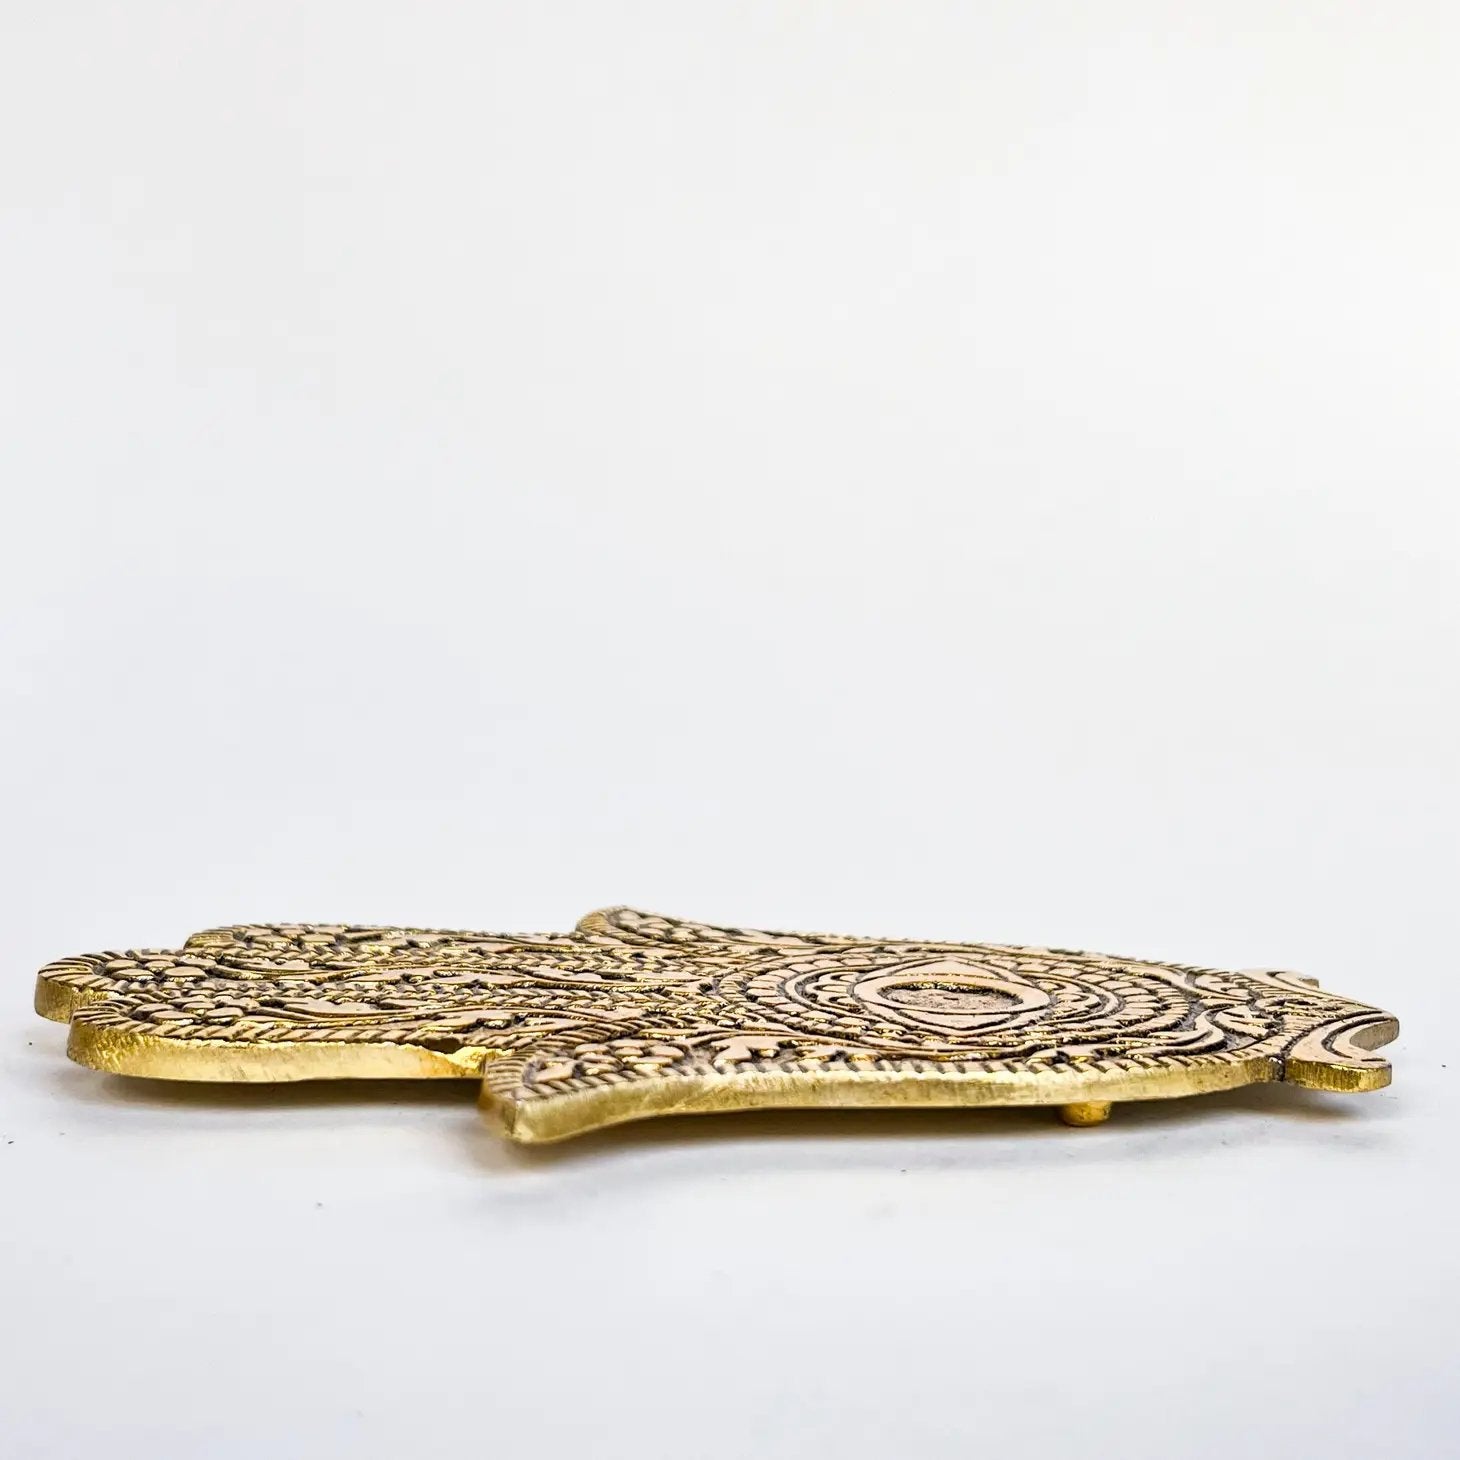 Decorated Hamsa Hand Incense Holder (Gold) - Incense Holders